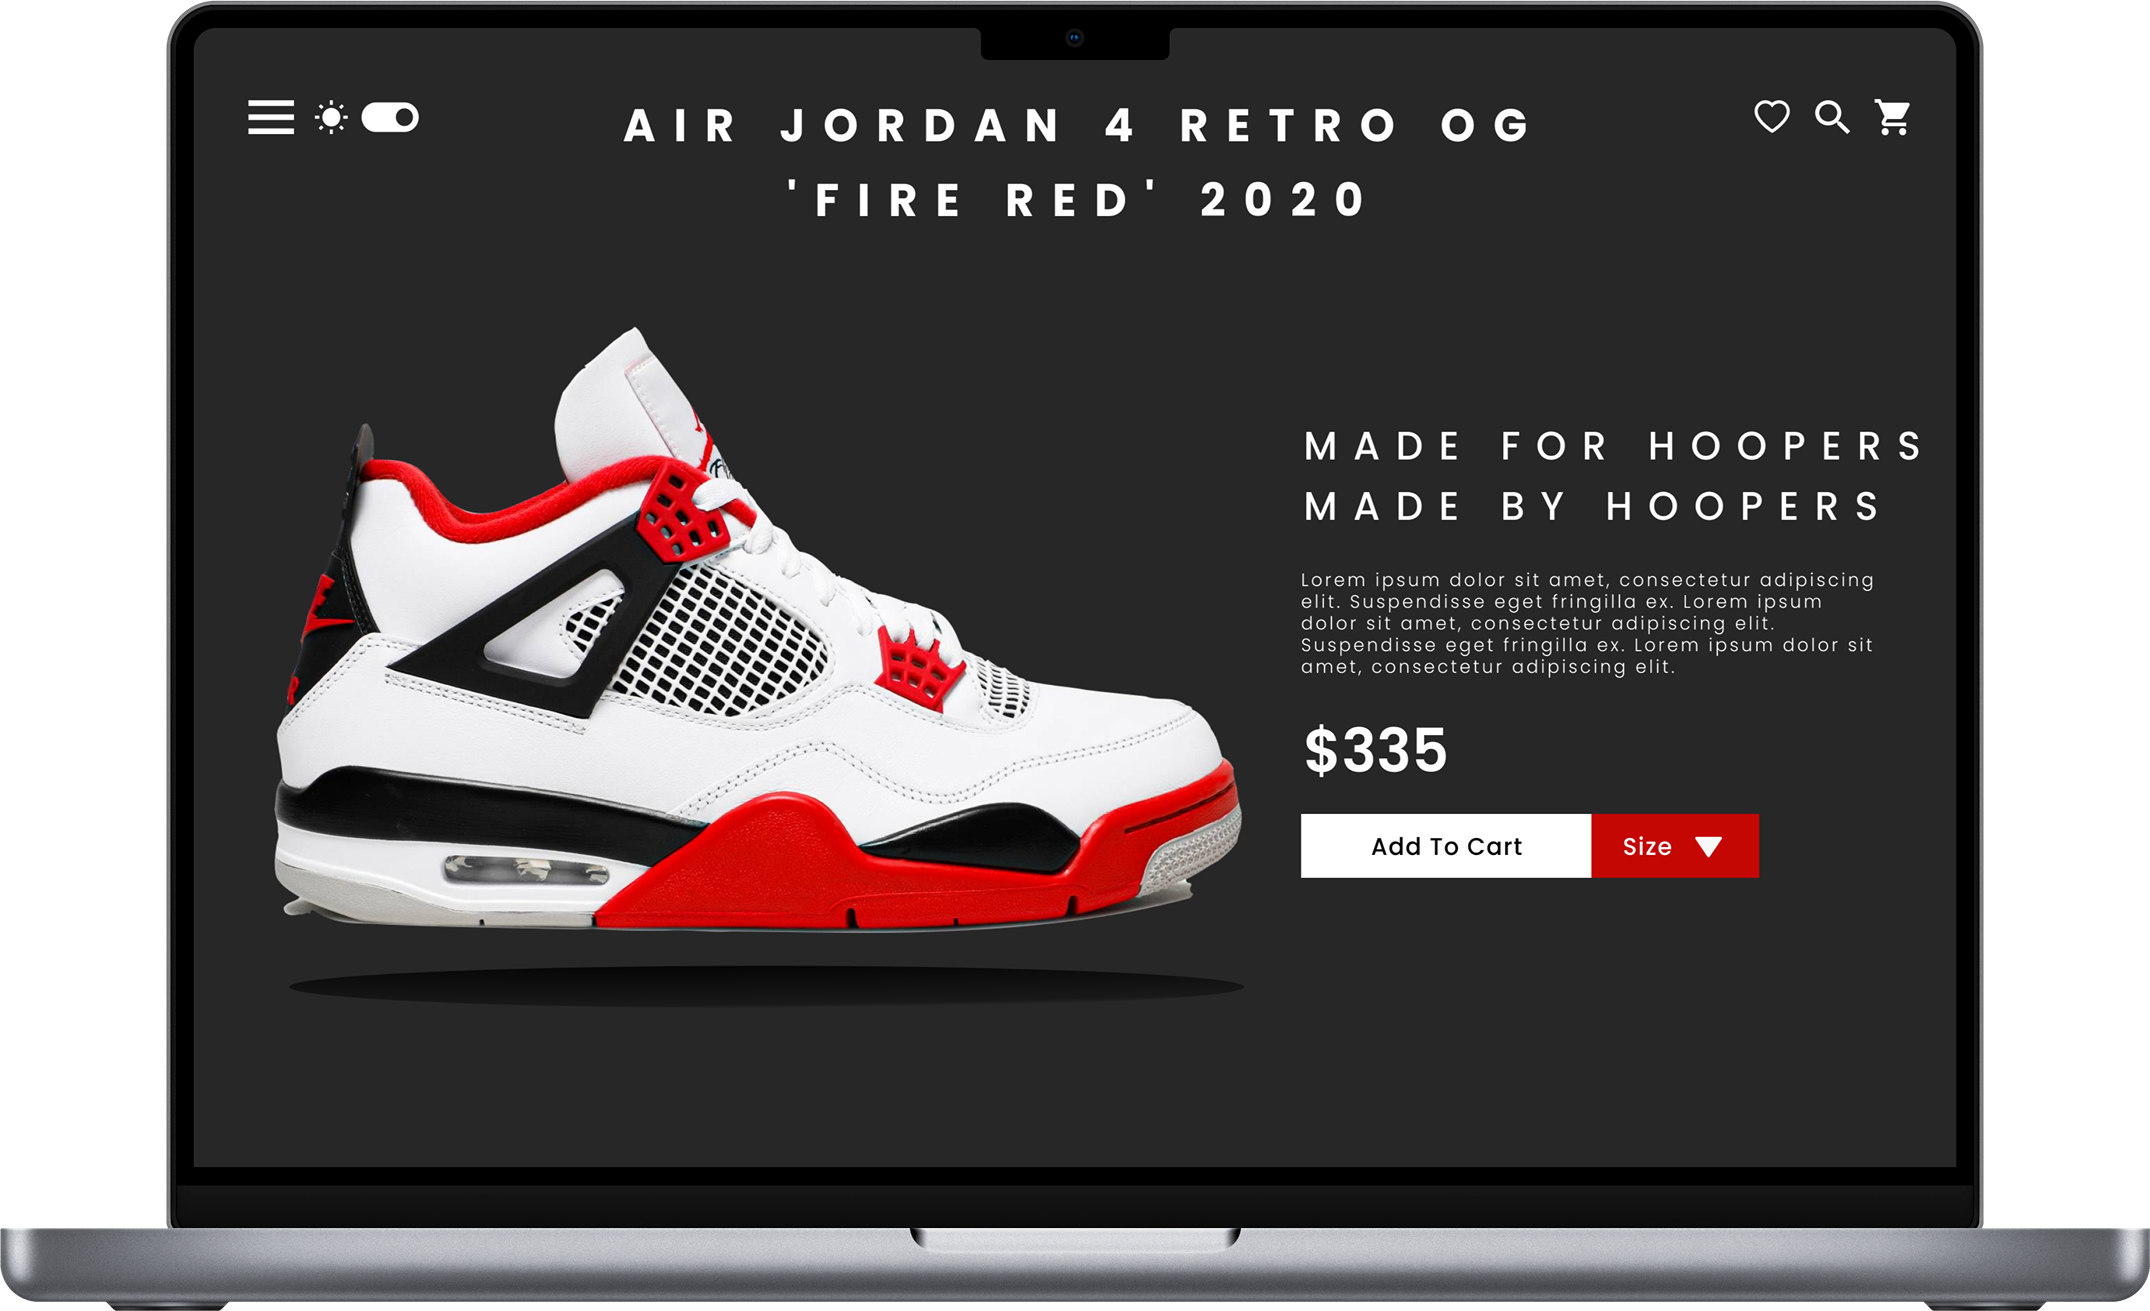 Nike Air Jordan Landing Page (UX/UI Concept) by EKKO on Dribbble